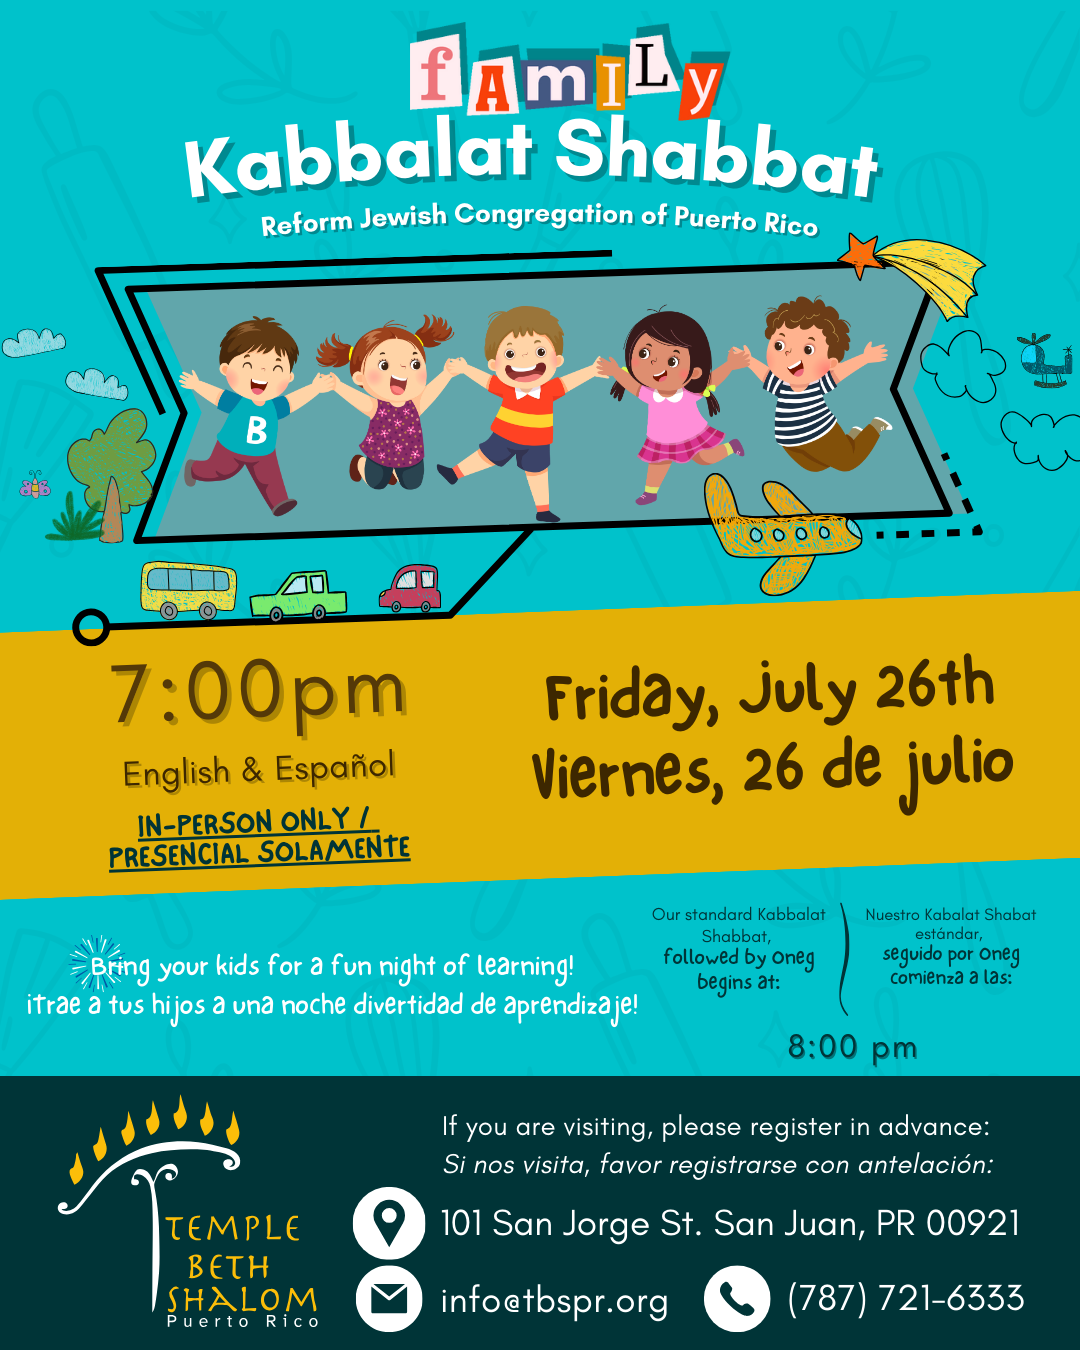 Family Kabbalat Shabbat – service starts at 7:00